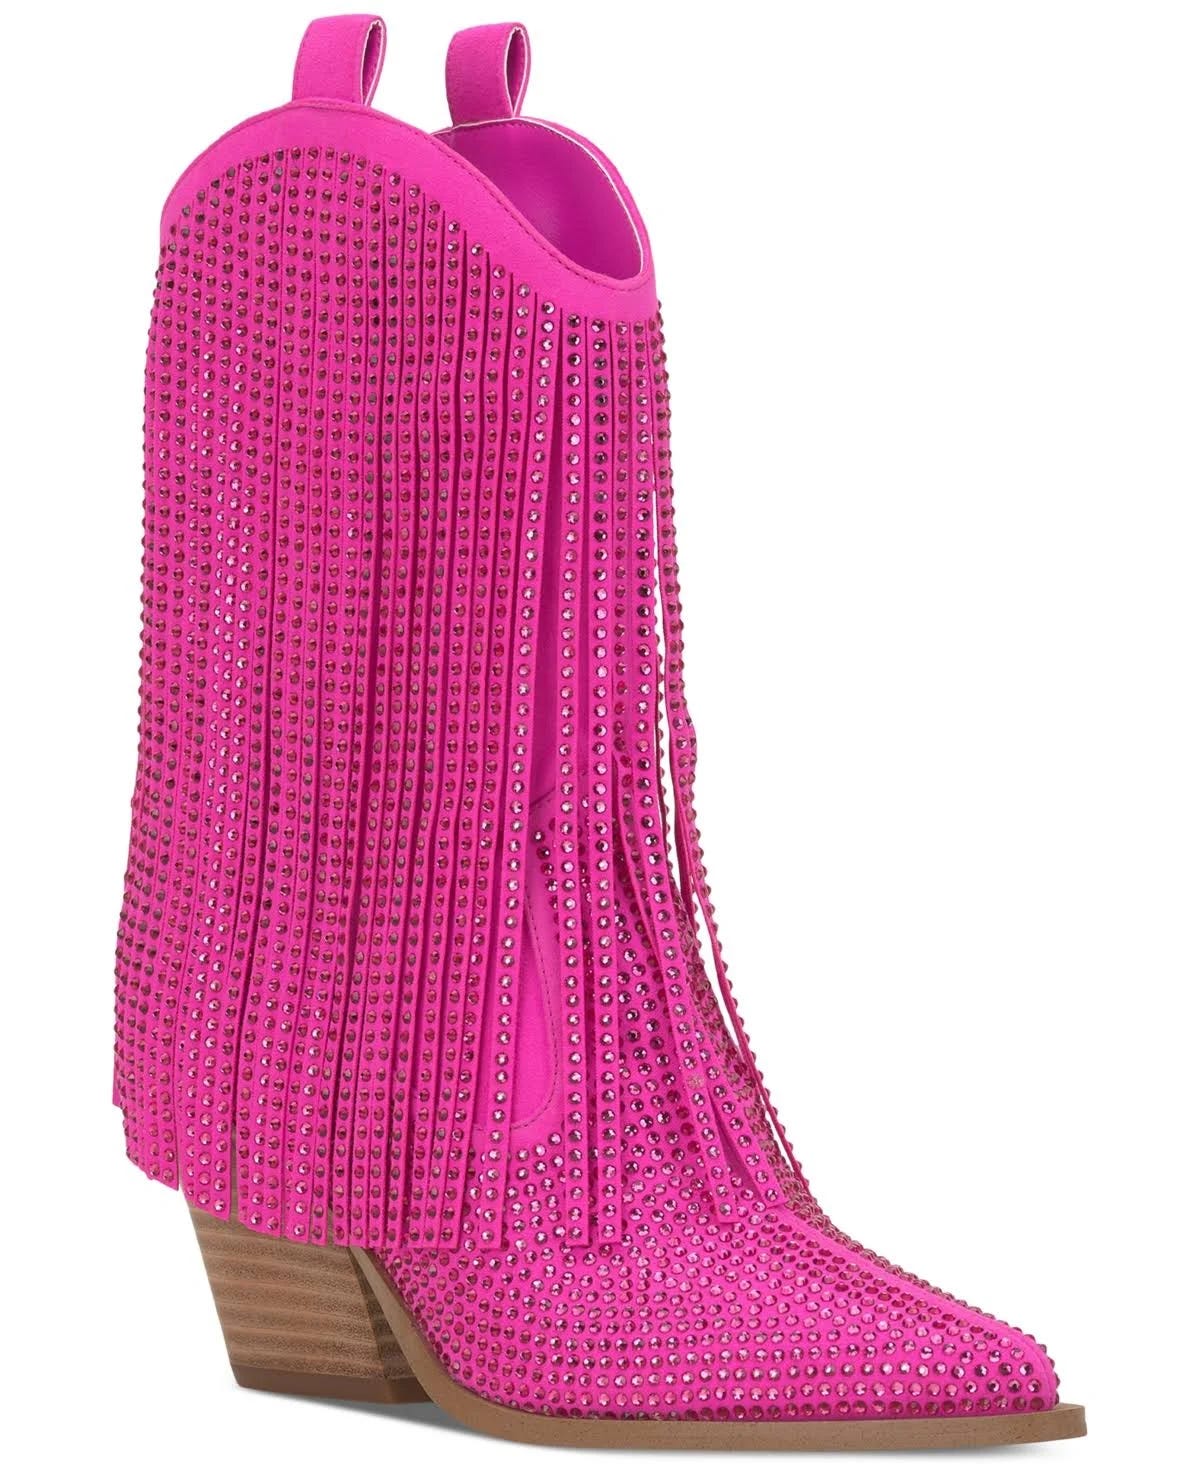 Stylish Pink Heel Booties with Fringe Embellishment | Image